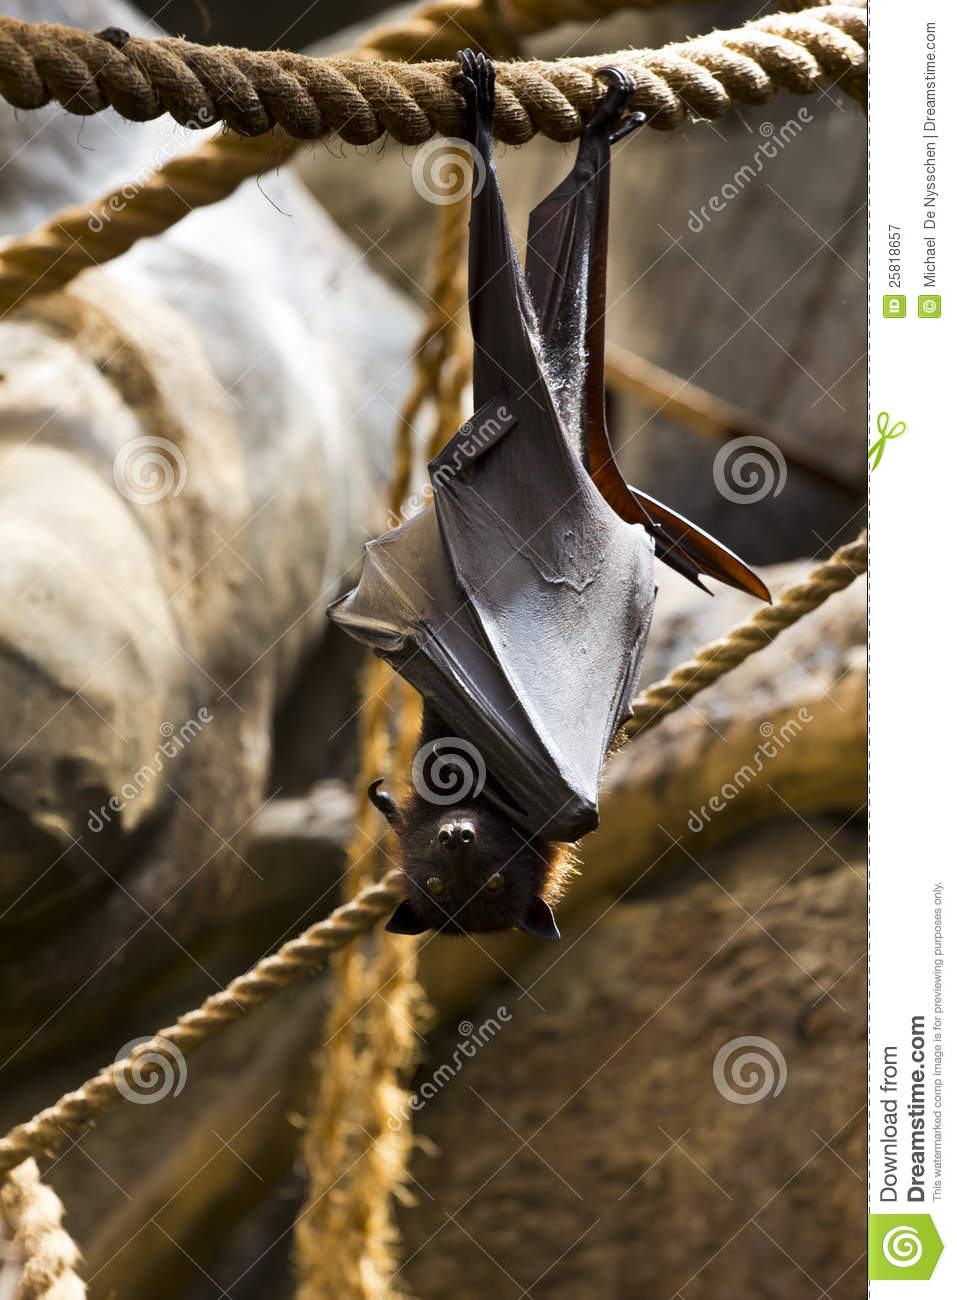 Fruit Bat Hanging Upside Down Royalty Free Stock Photography   Image